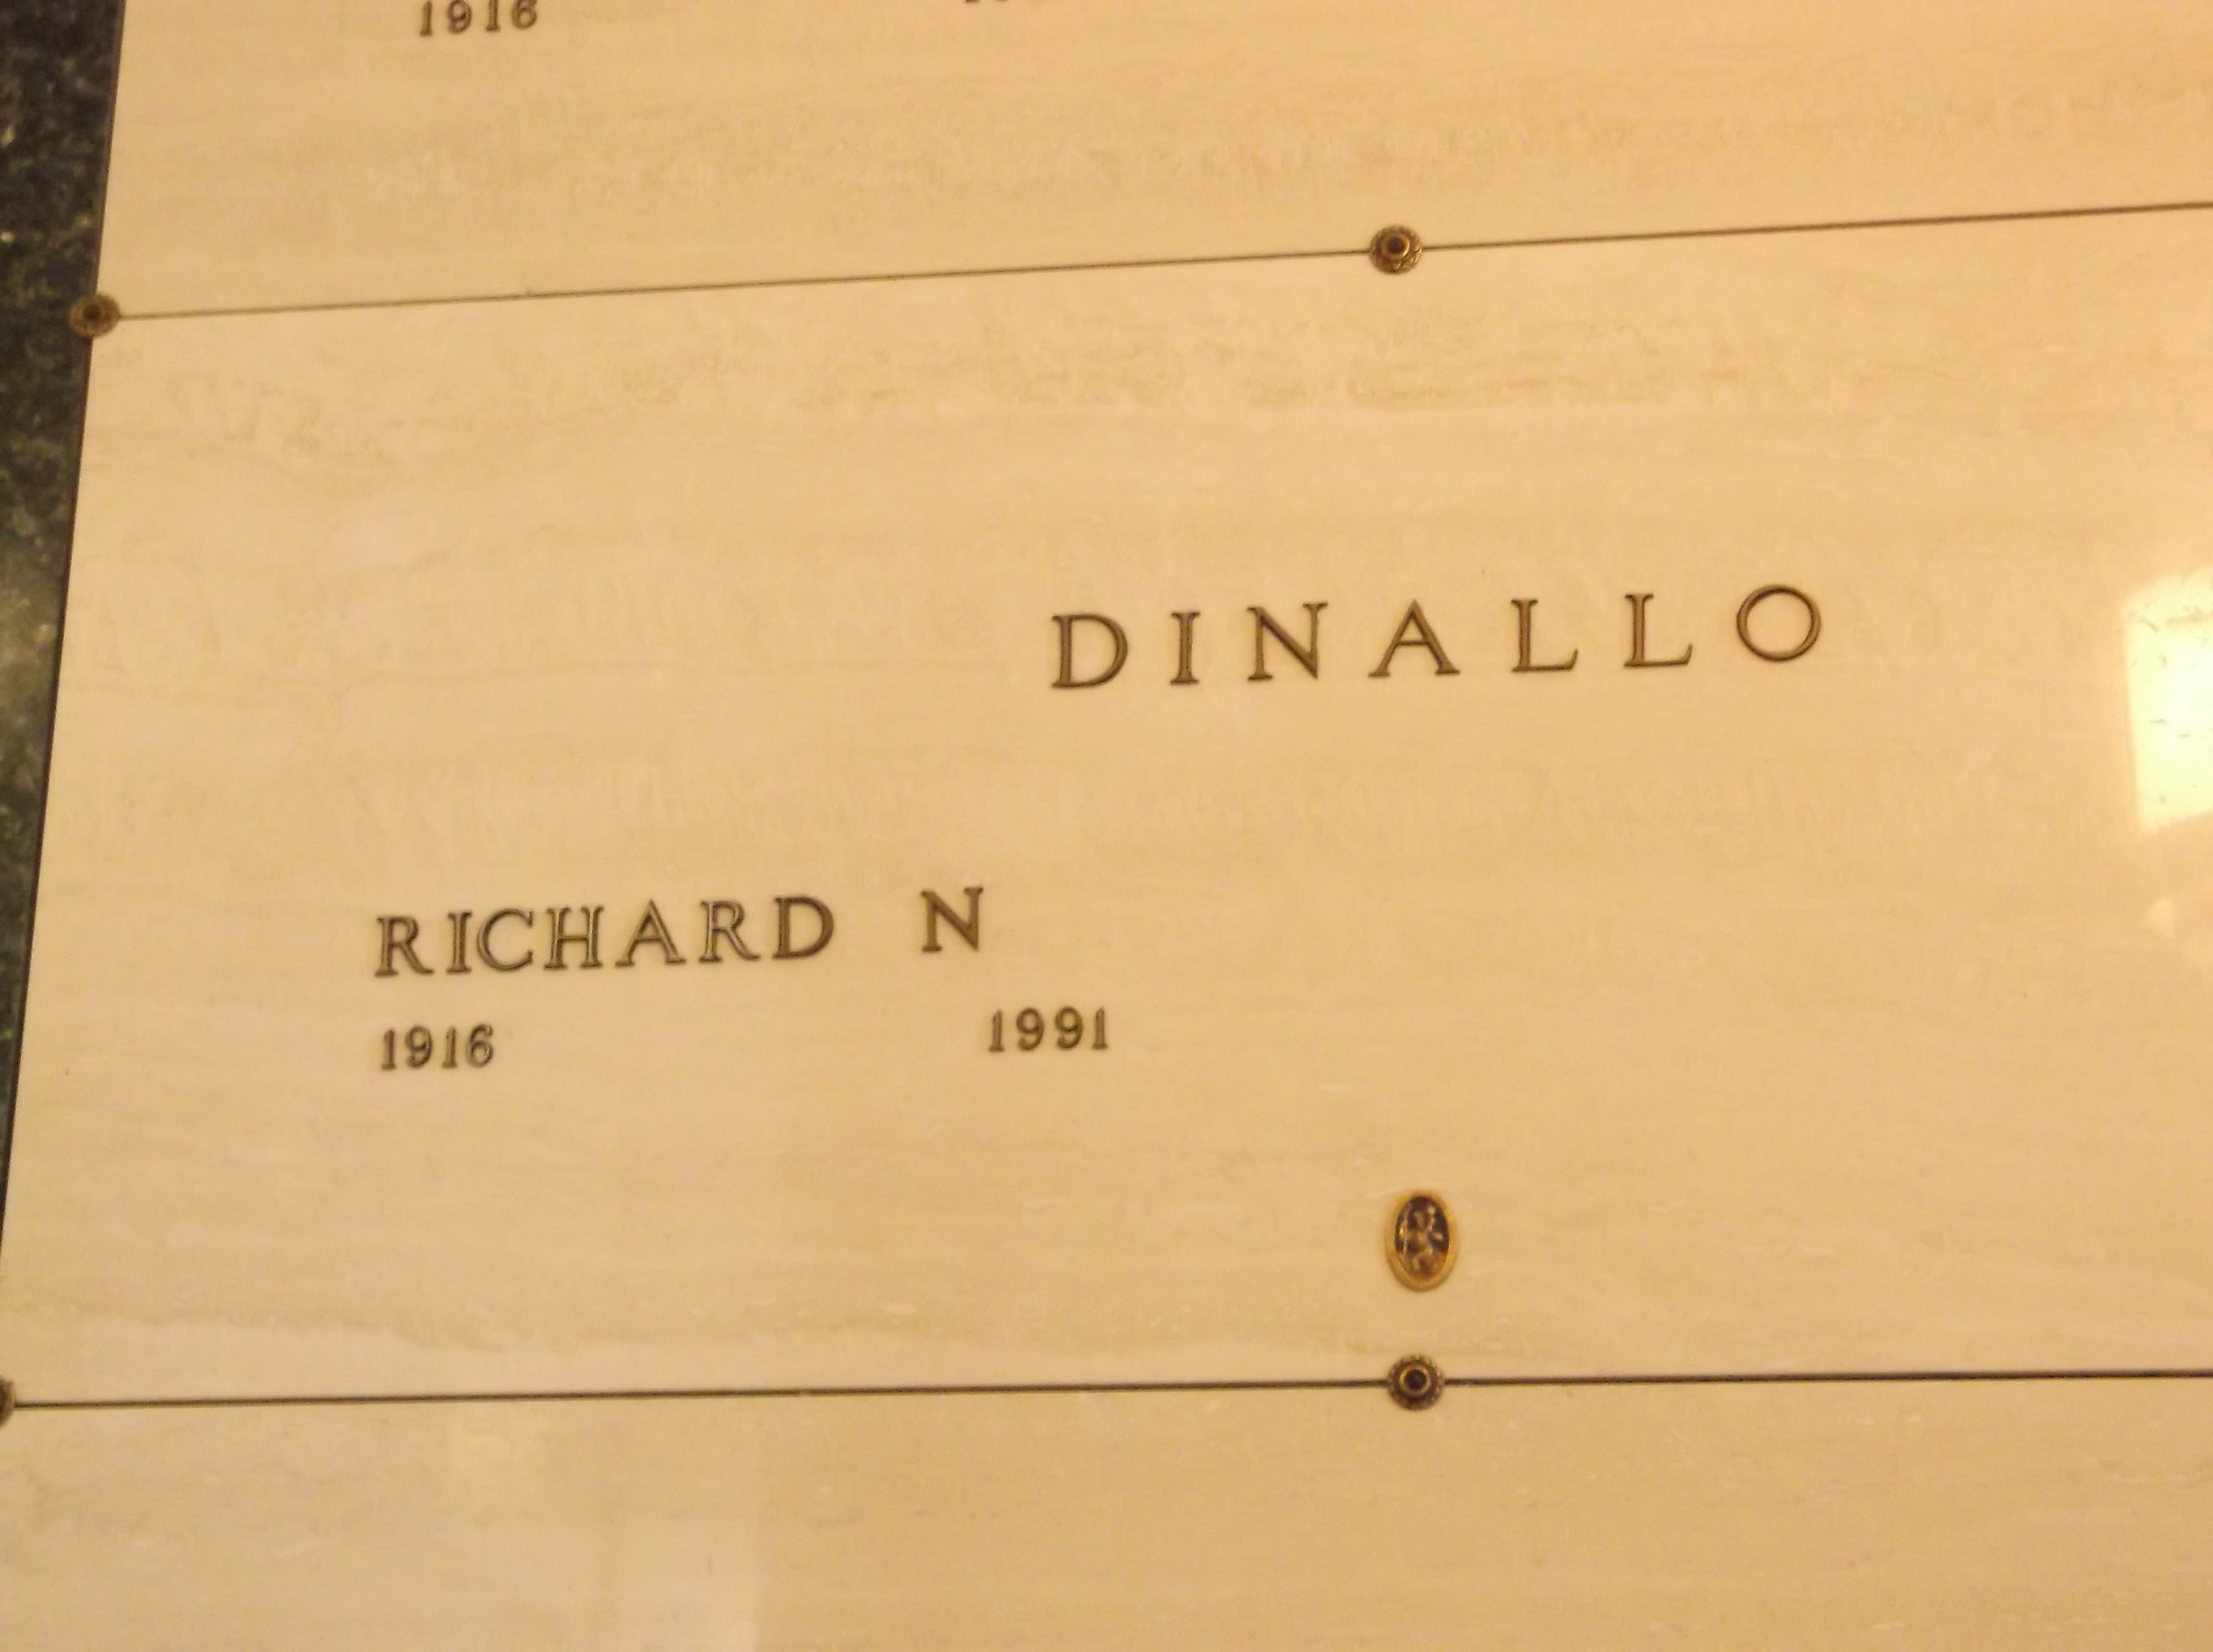 Richard N Dinallo